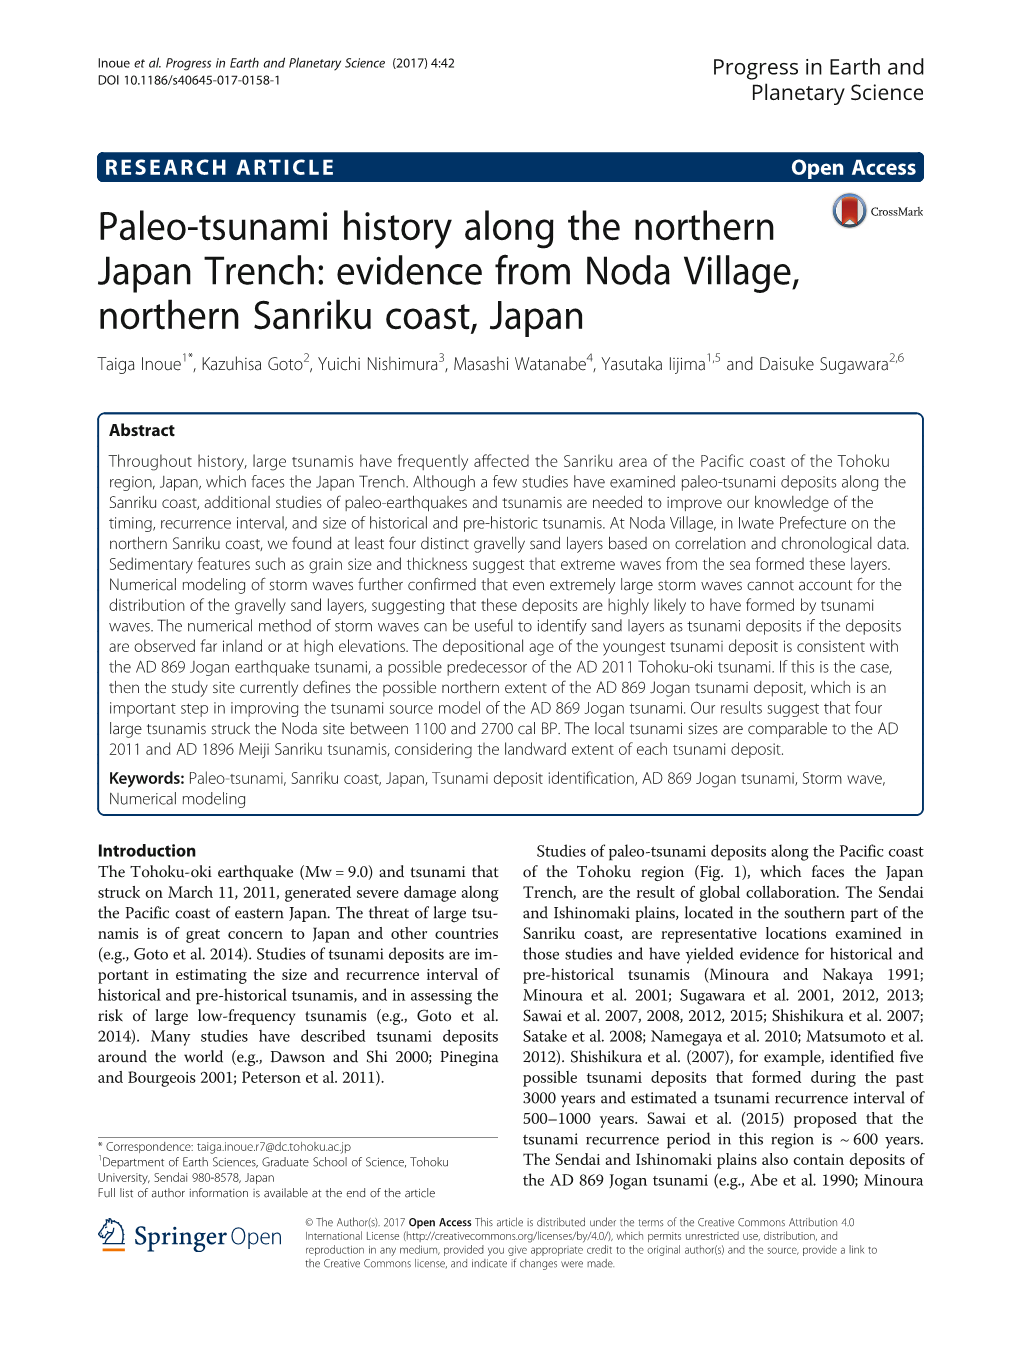 Paleo-Tsunami History Along the Northern Japan Trench: Evidence